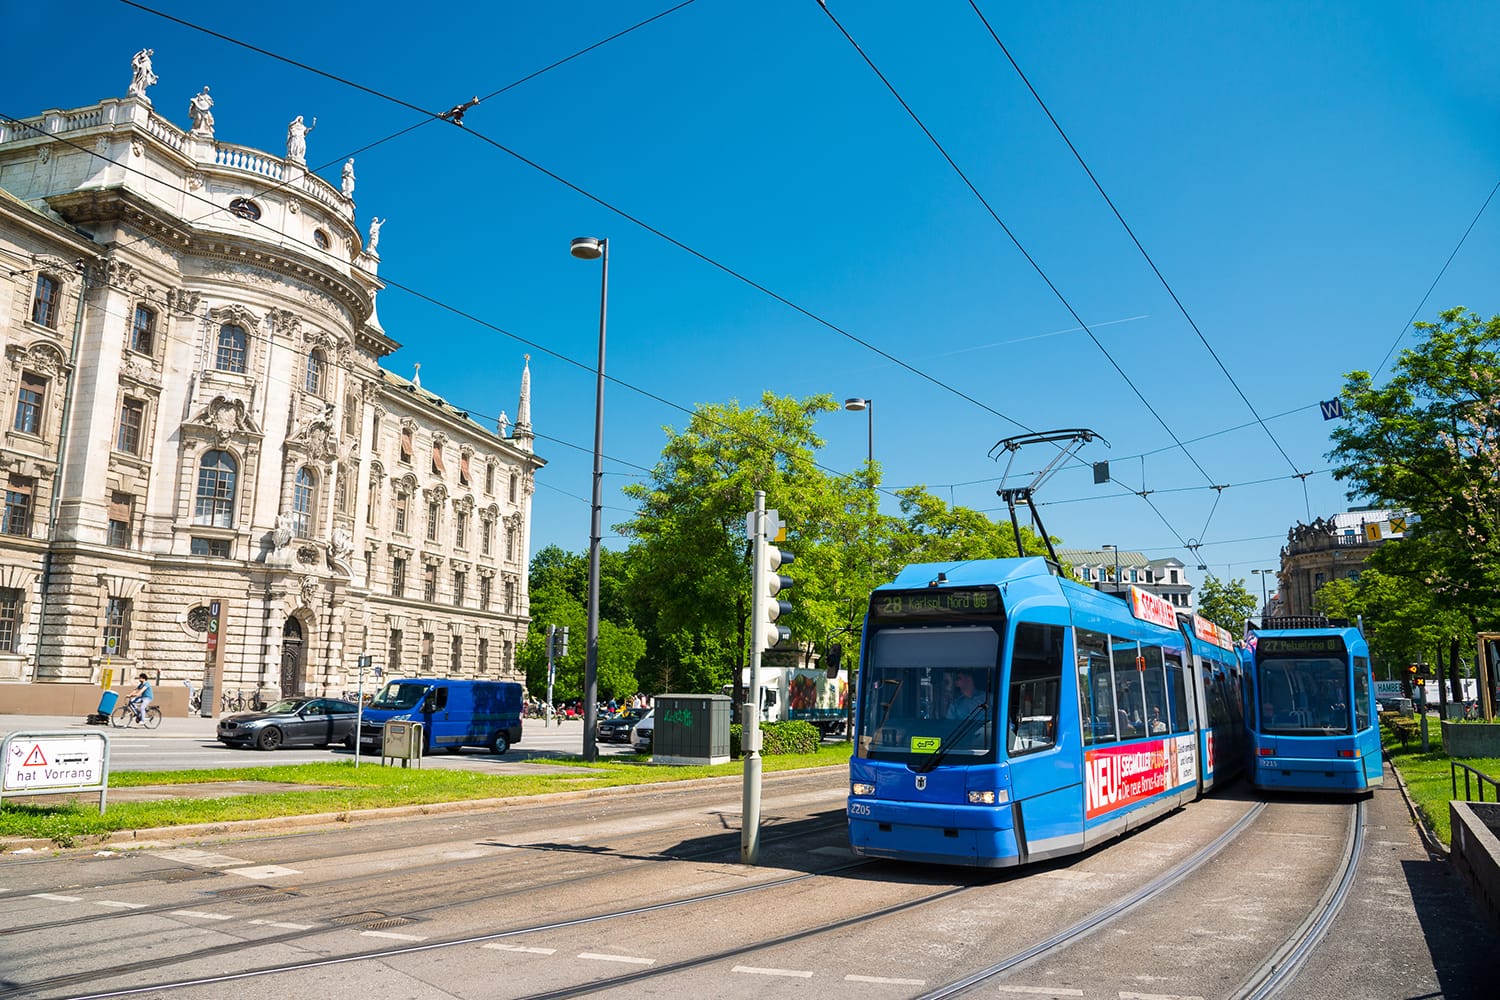 Tram in Munich, Germany